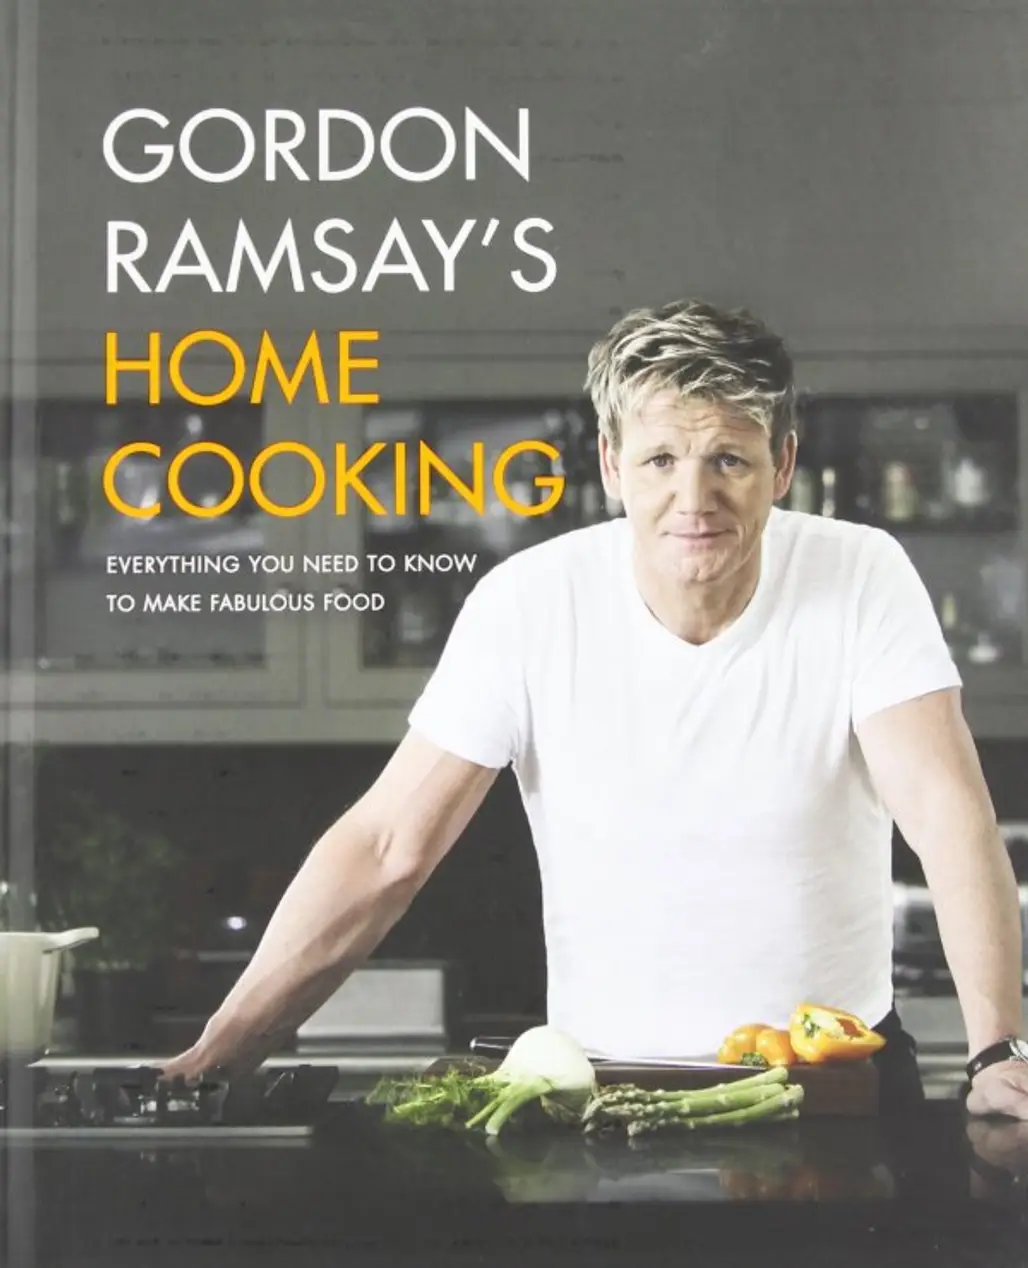 Gordon Ramsay’s Home Cooking by Gordon Ramsay